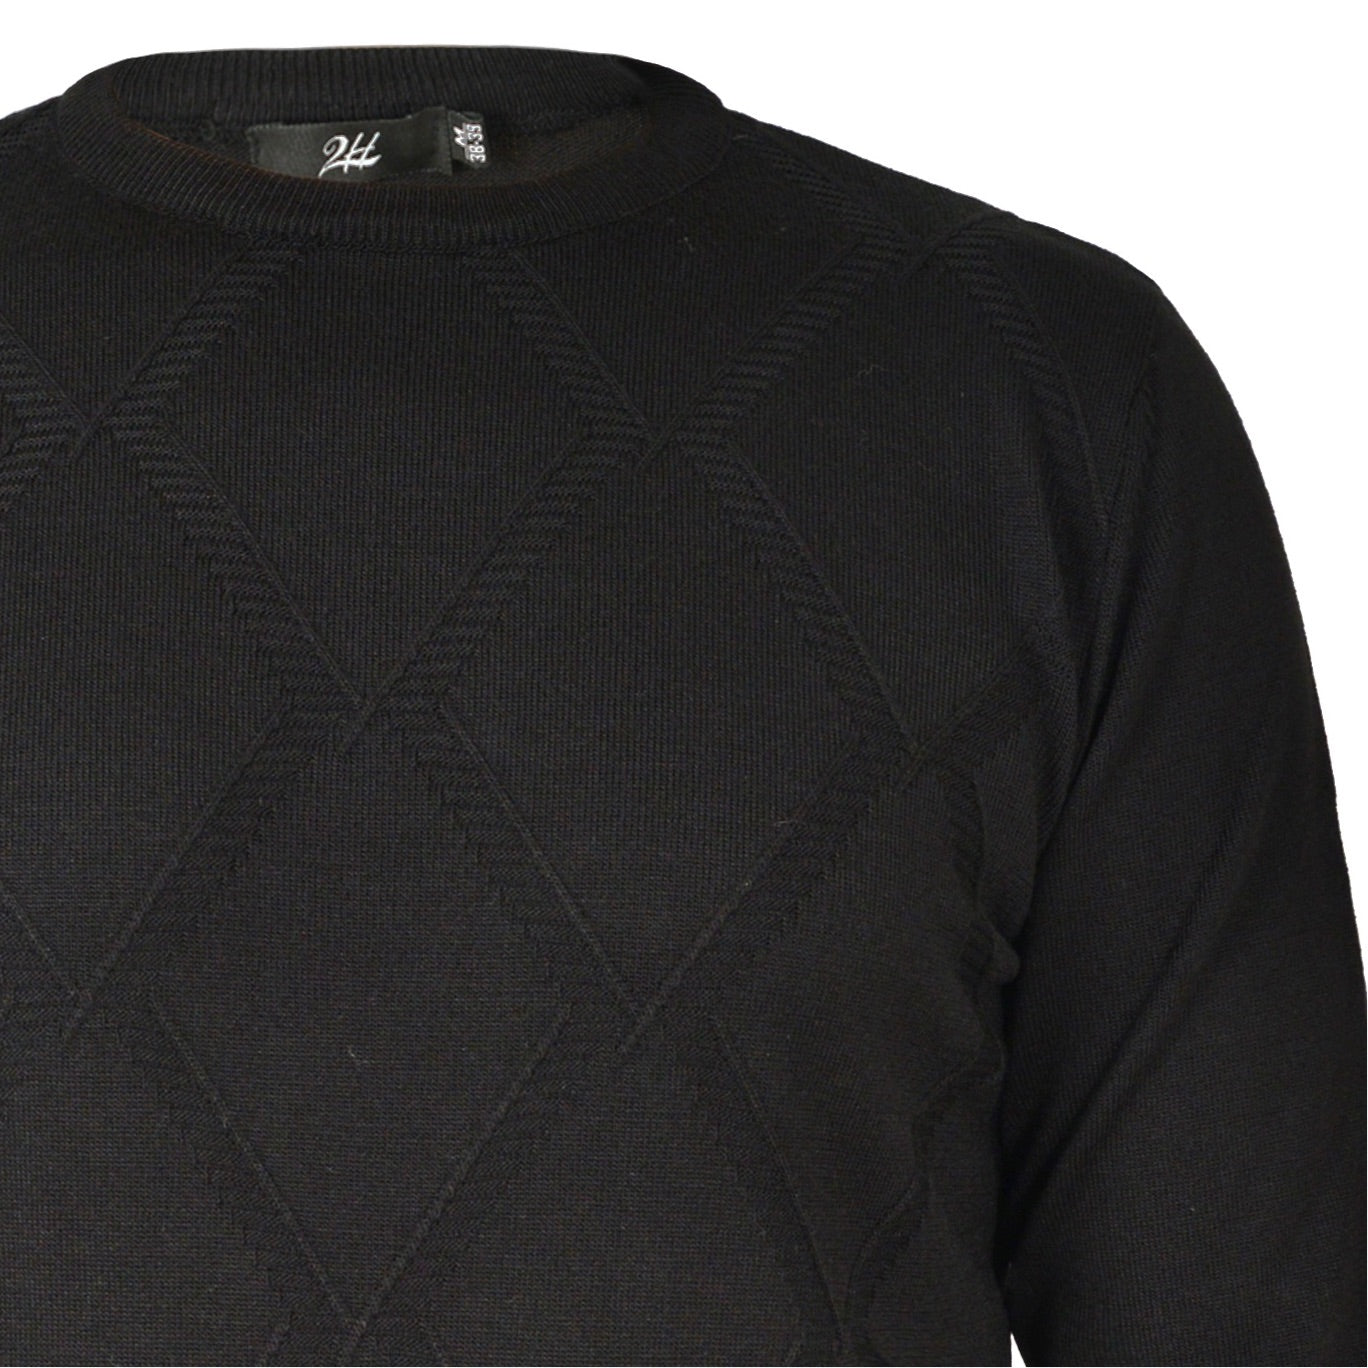 2H Black Lozenge Knitted Round Neck Sweater